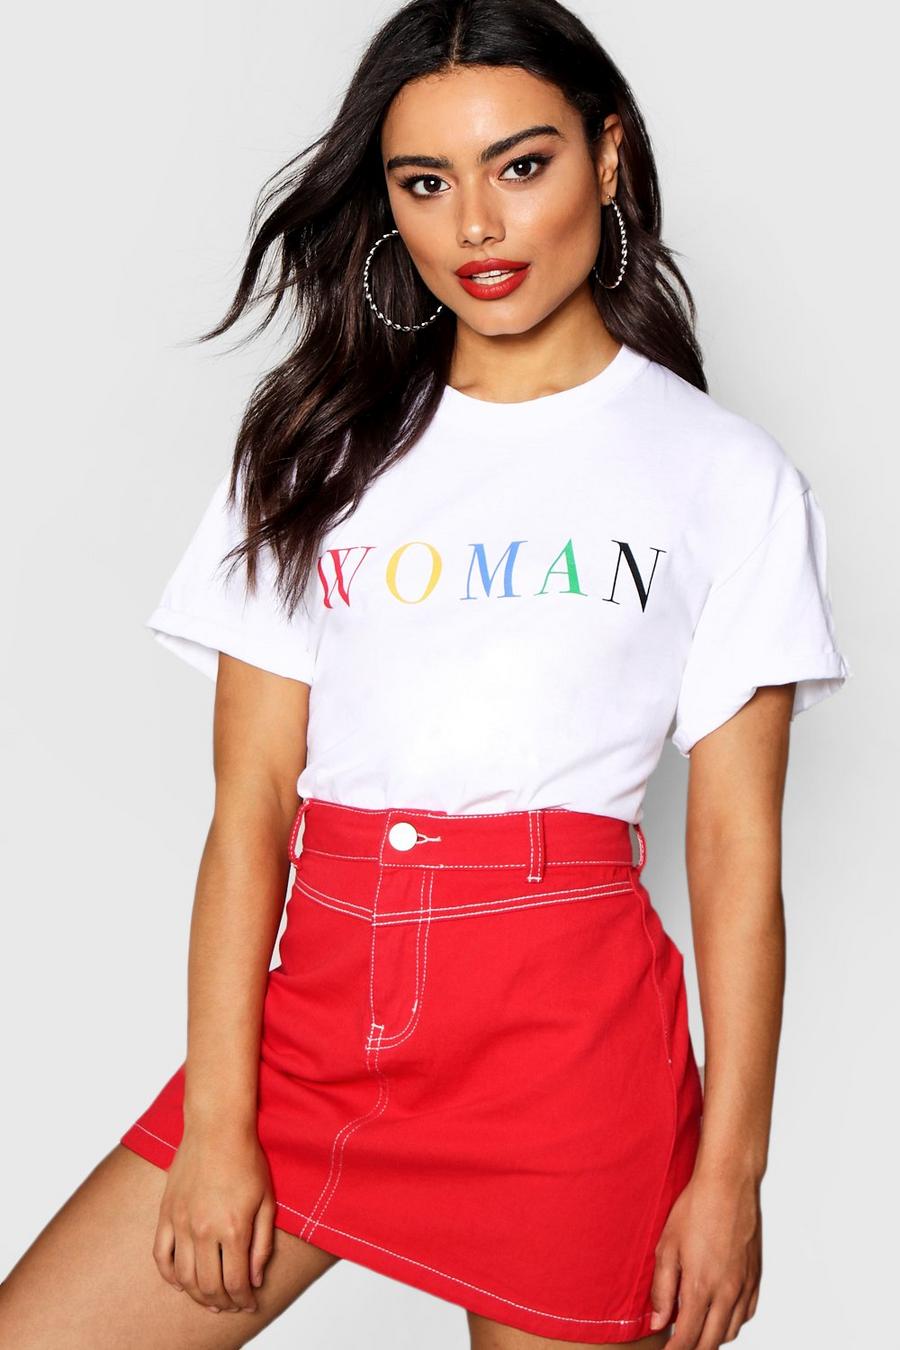 T-shirt Woman con slogan in colori arcobaleno, White bianco